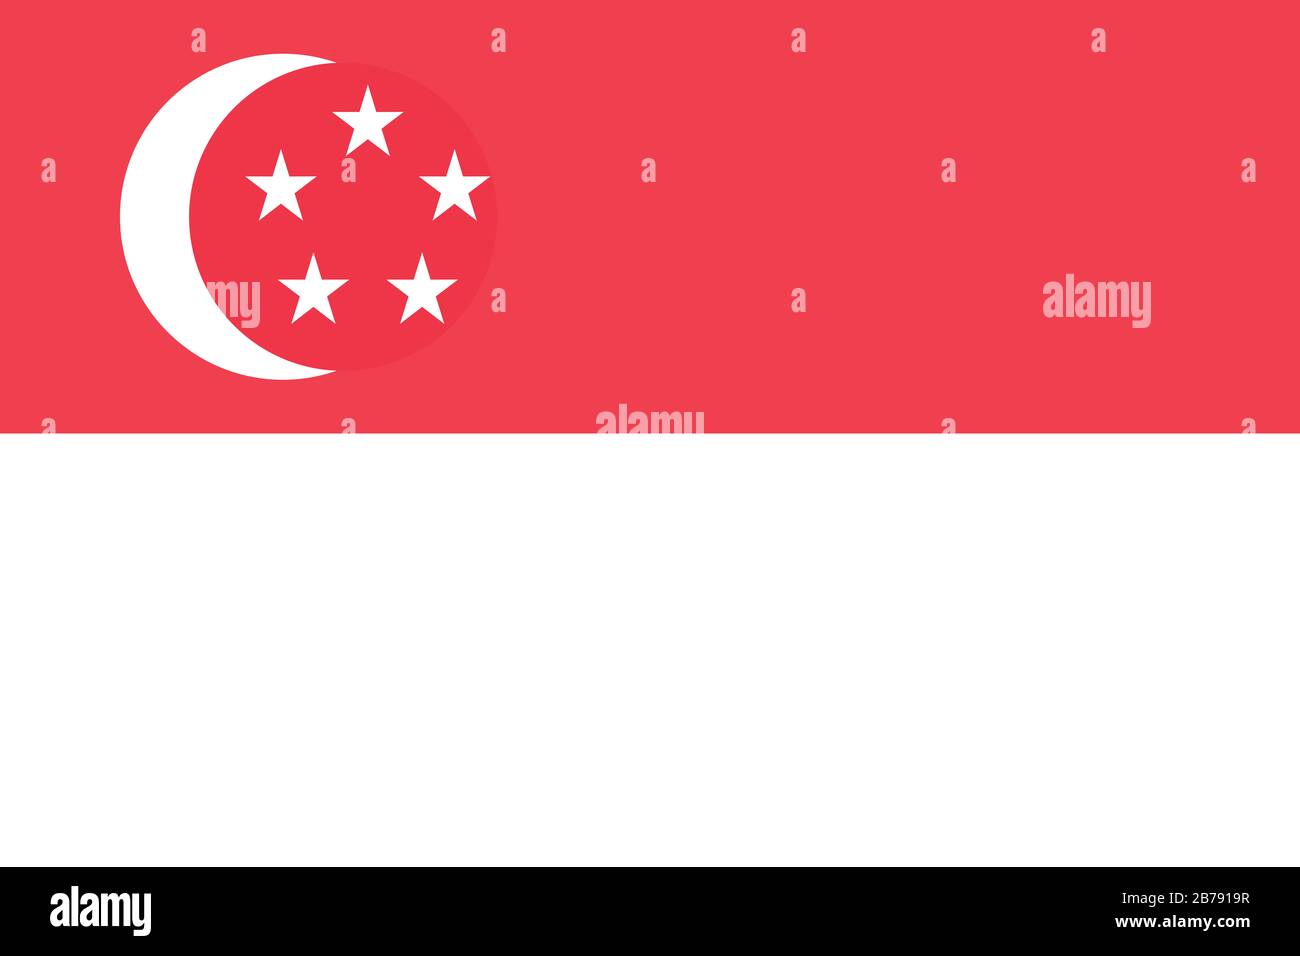 Flag of Singapore - Singaporean flag standard ratio - modalità colore RGB reale Foto Stock